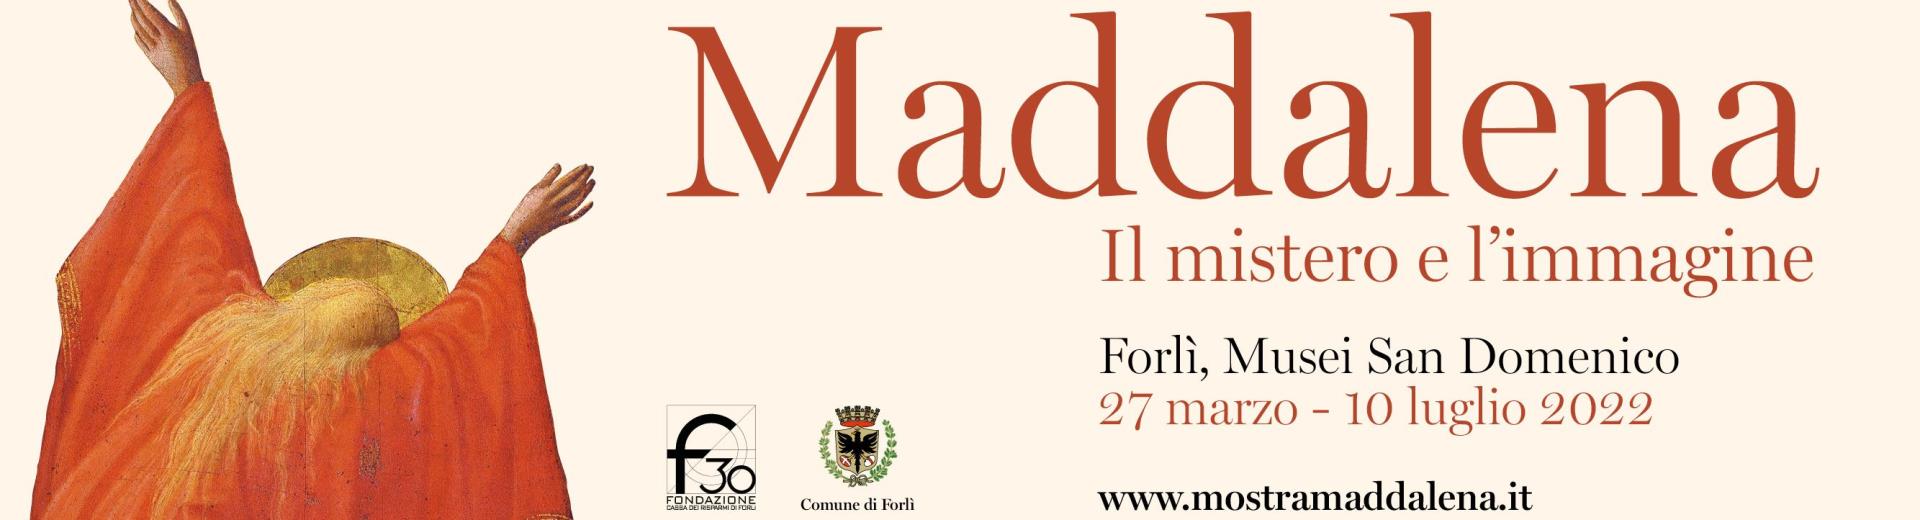 Mostra Maddalena Forlì Best Western Hotel Globus City offerta speciale hotel